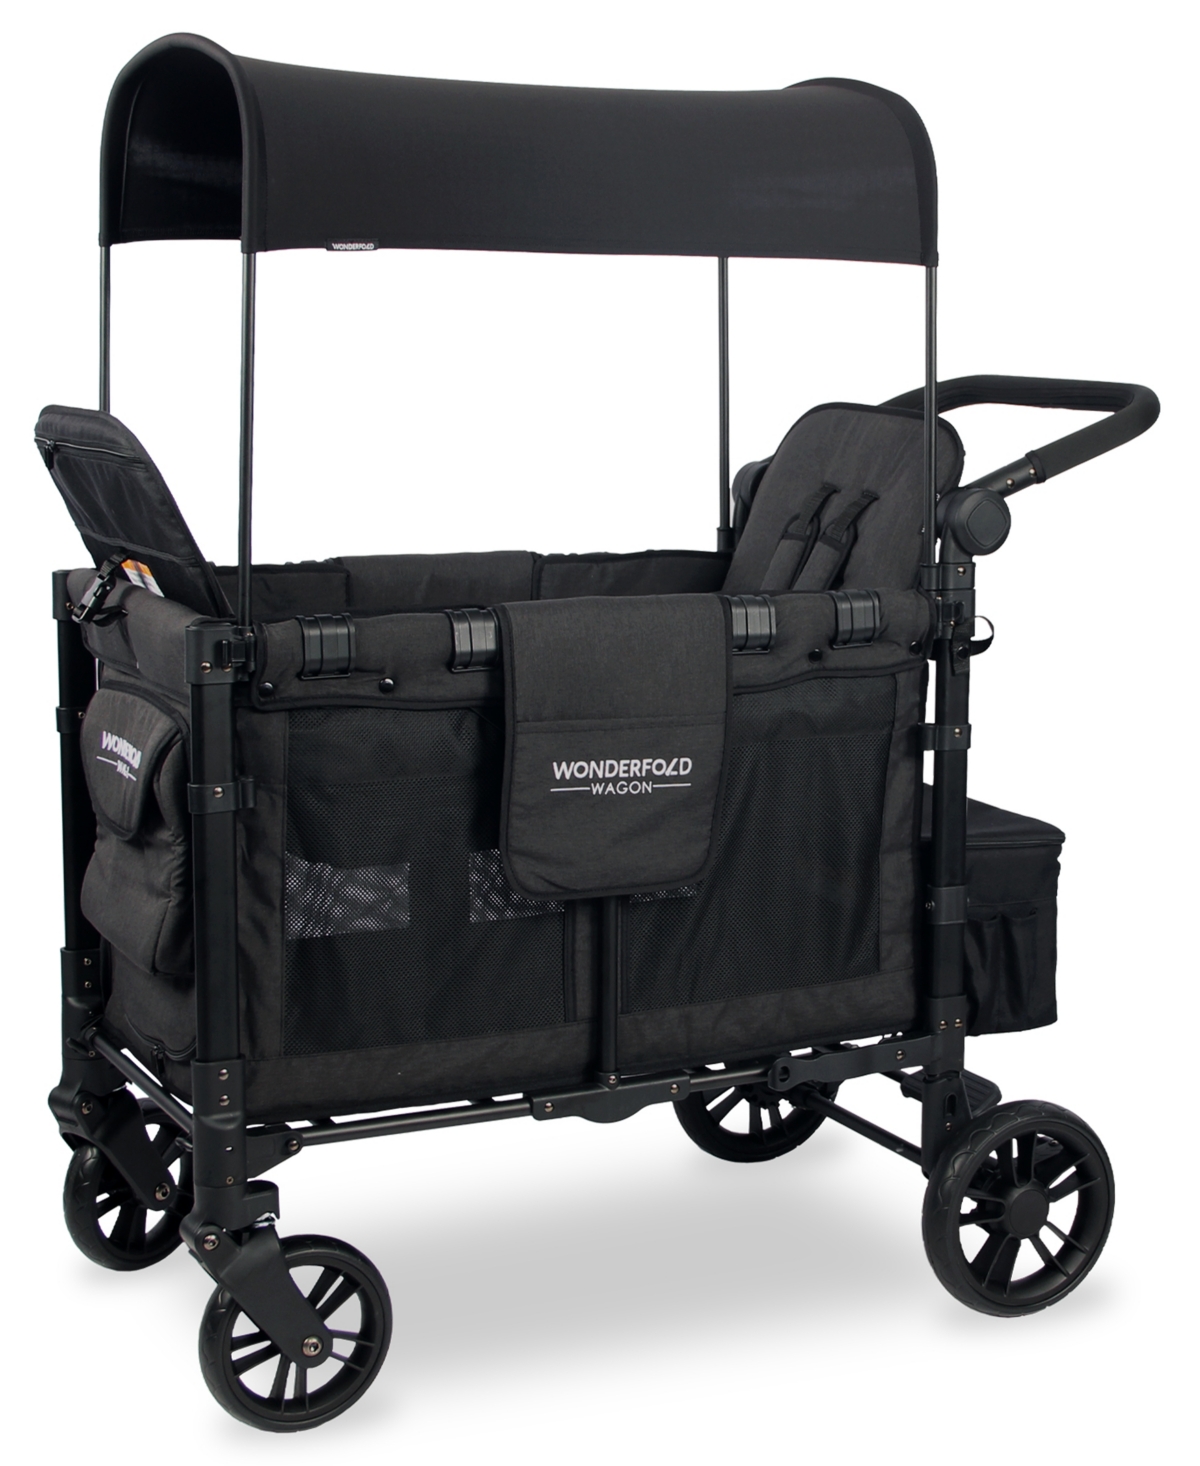 Wonderfold Wagon W2 Elite Front Zippered Double Stroller Wagon In Volcanic Black